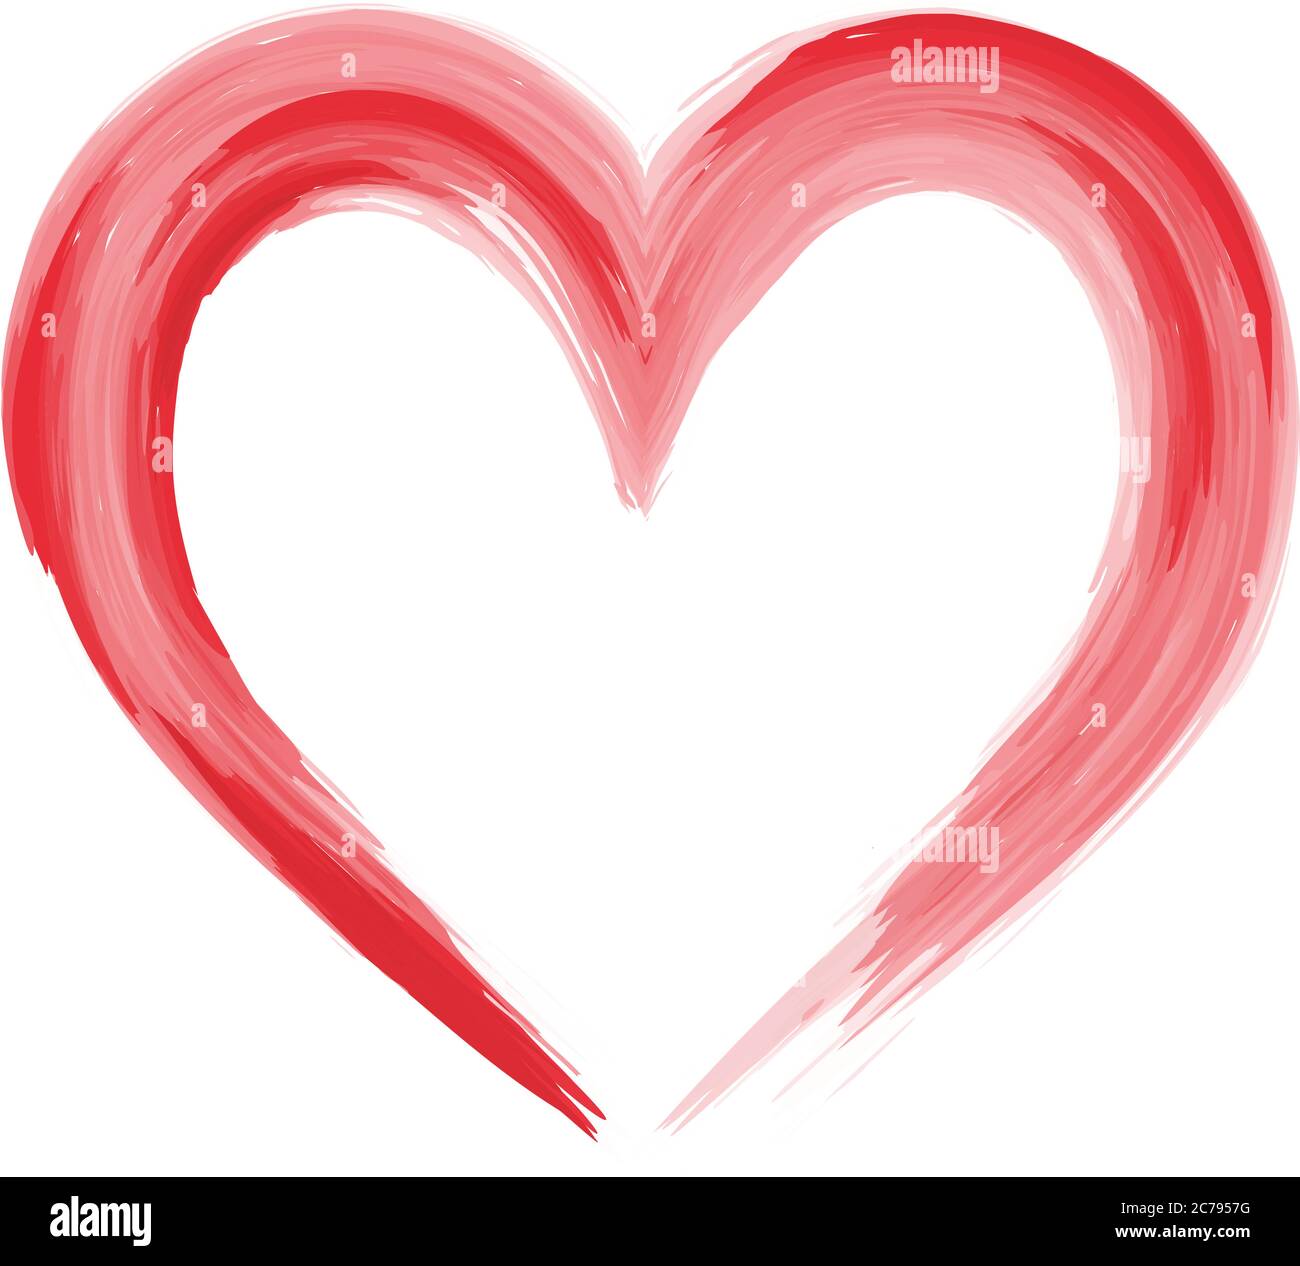 Rote Aquarell Herz Form Umriss Vektor Illustration isoliert auf weiß Stock Vektor